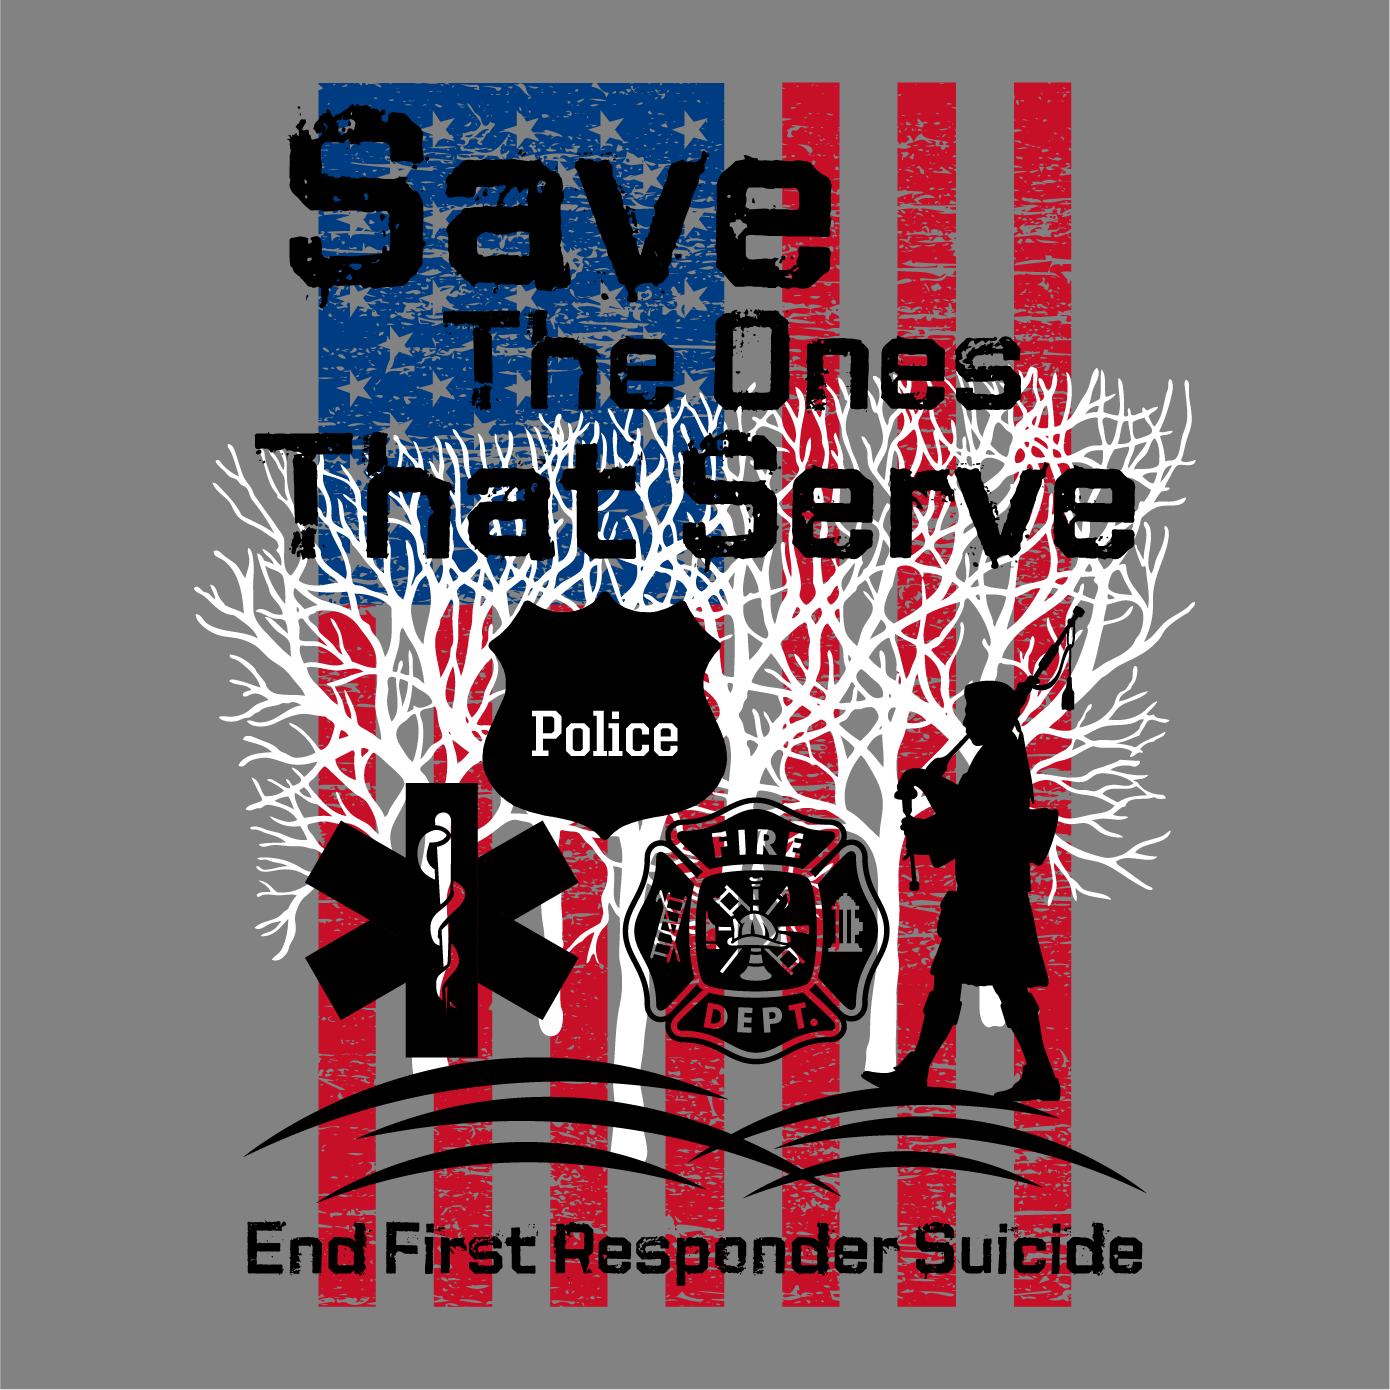 First responder suicide prevention shirt design - zoomed